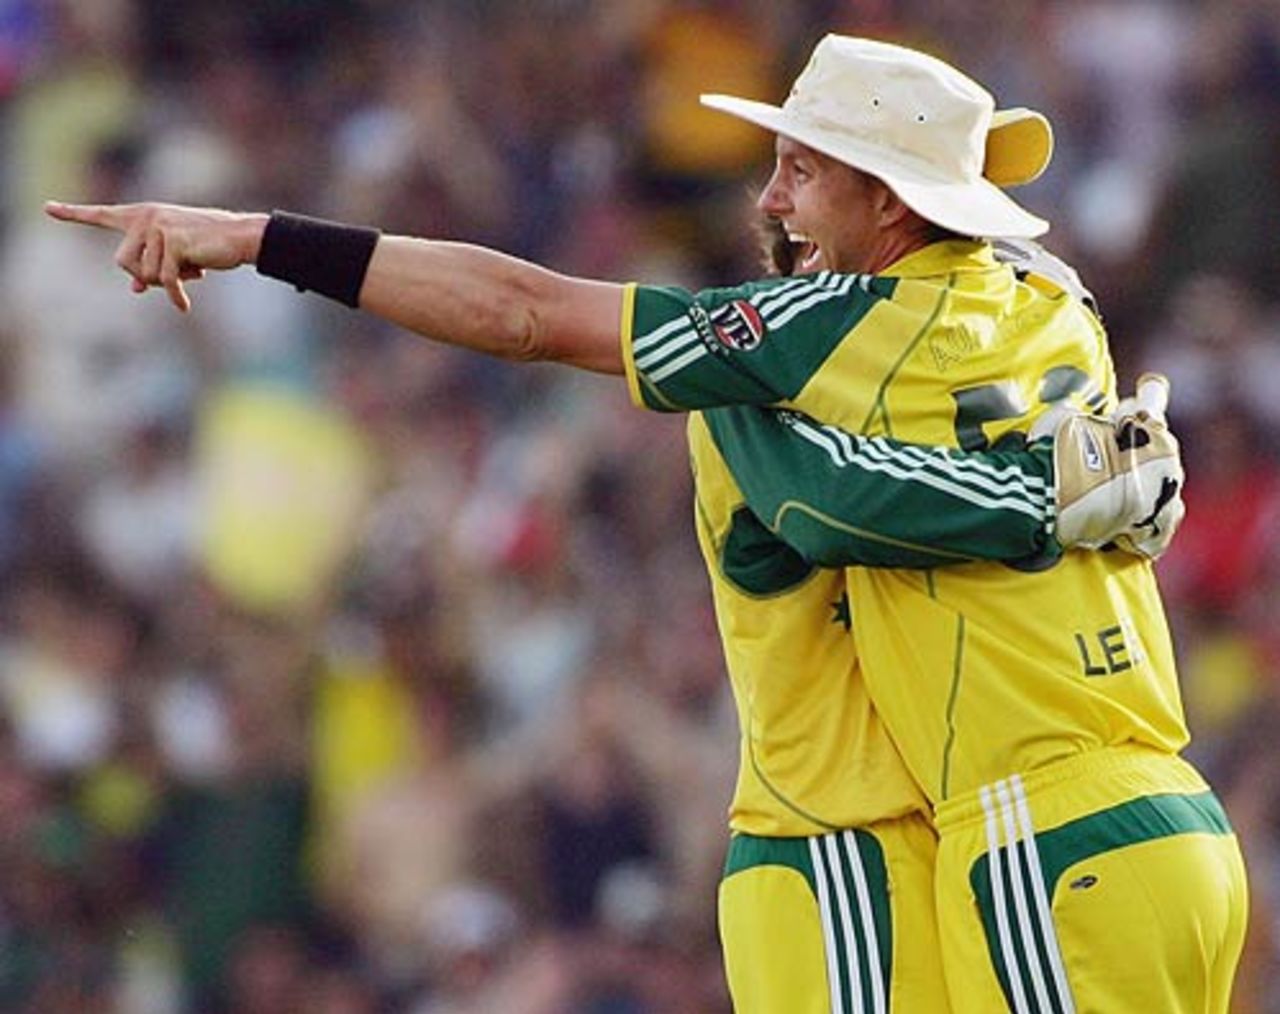 Brett Lee is delighted after catching Sanath Jayasuriya, Australia v Sri Lanka, VB Series, 2nd Final, Sydney, February 12, 2006